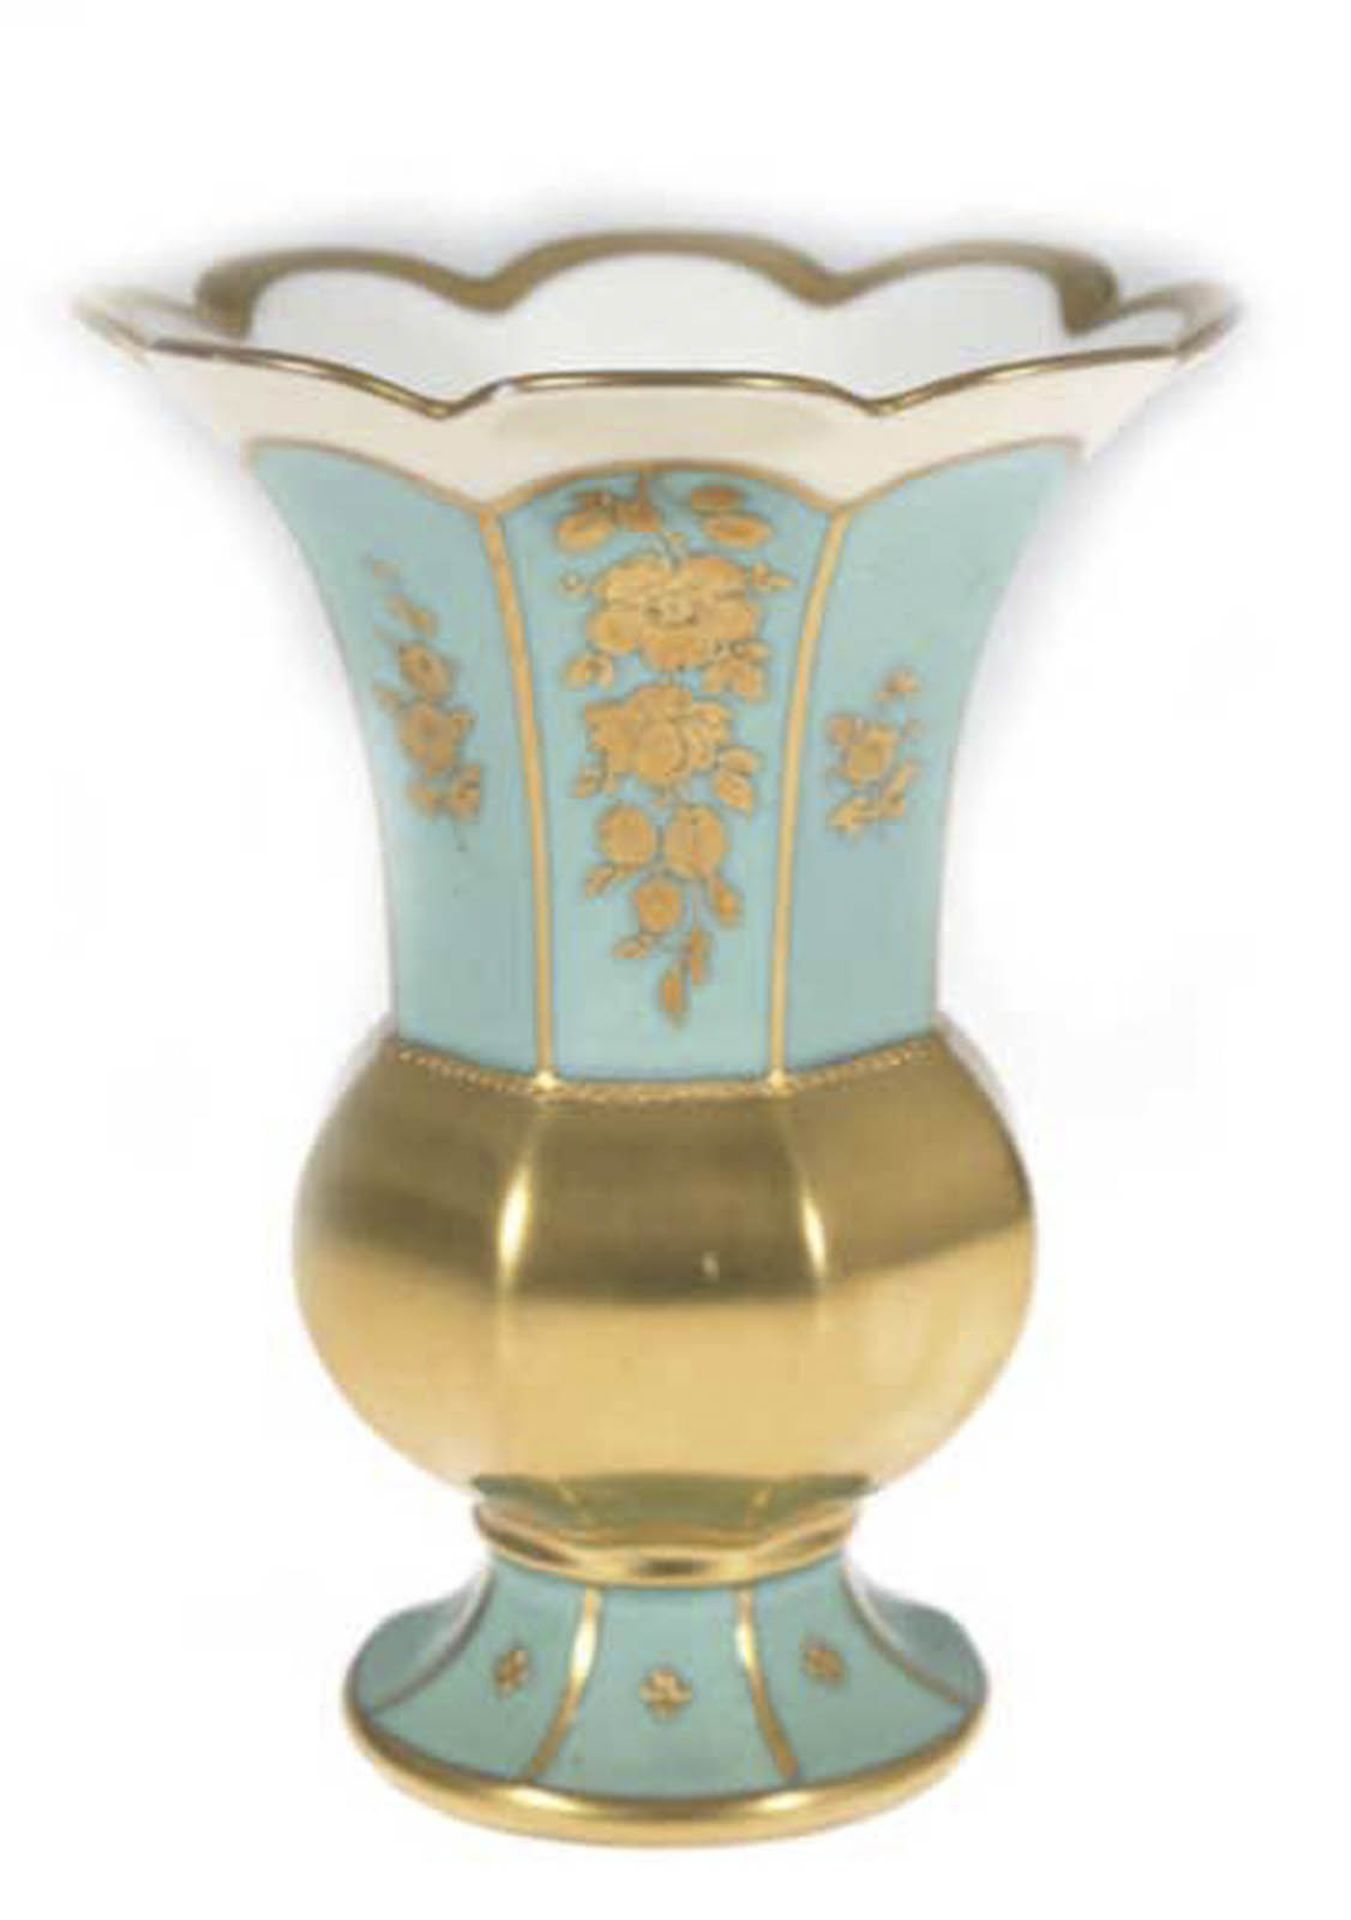 Vase, Hutschenreuther, Dresden 1914, grüner Fond, teilvergoldet, goldene Blumenbemalung, H. 15 cm